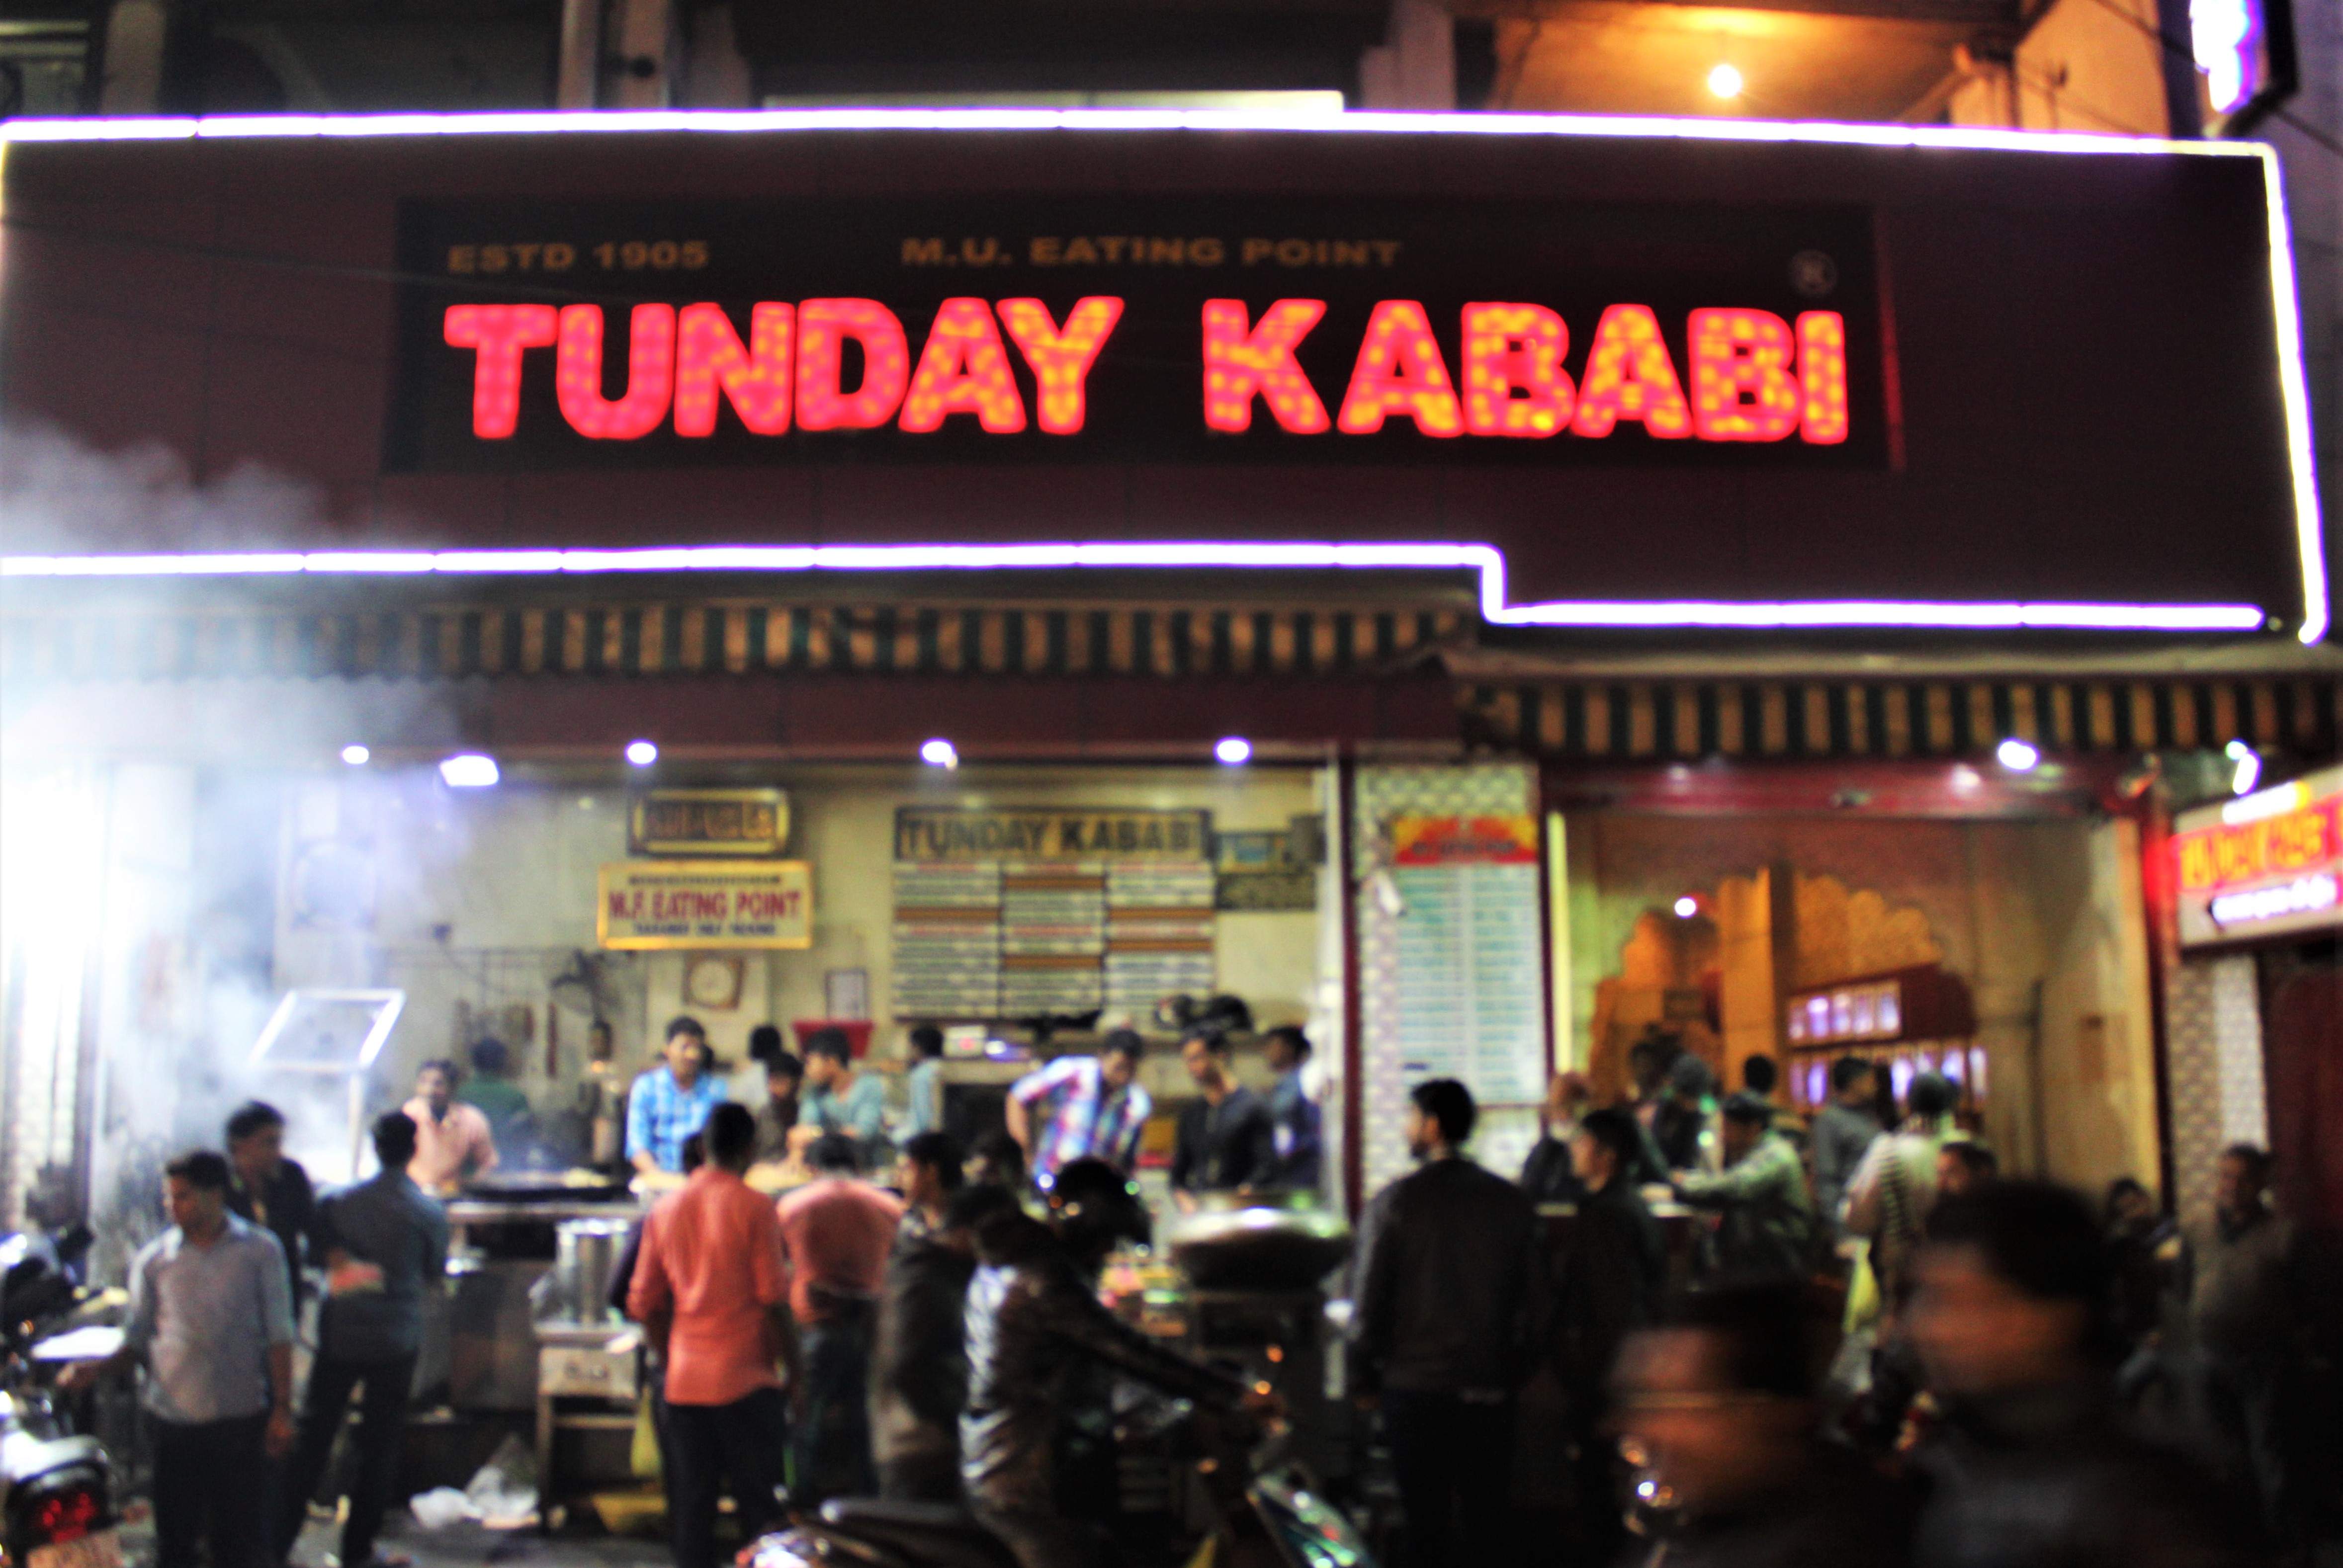 The famous Tunday Kababi - Aminabad outlet